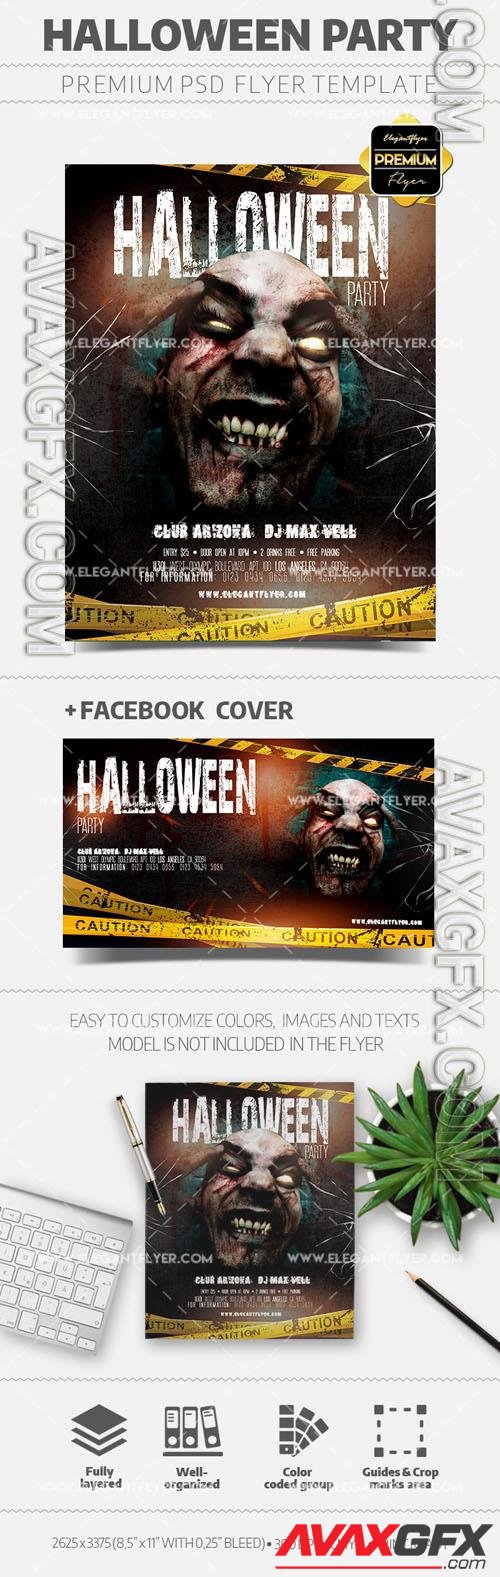 Halloween Party Flyer PSD Template vol 3